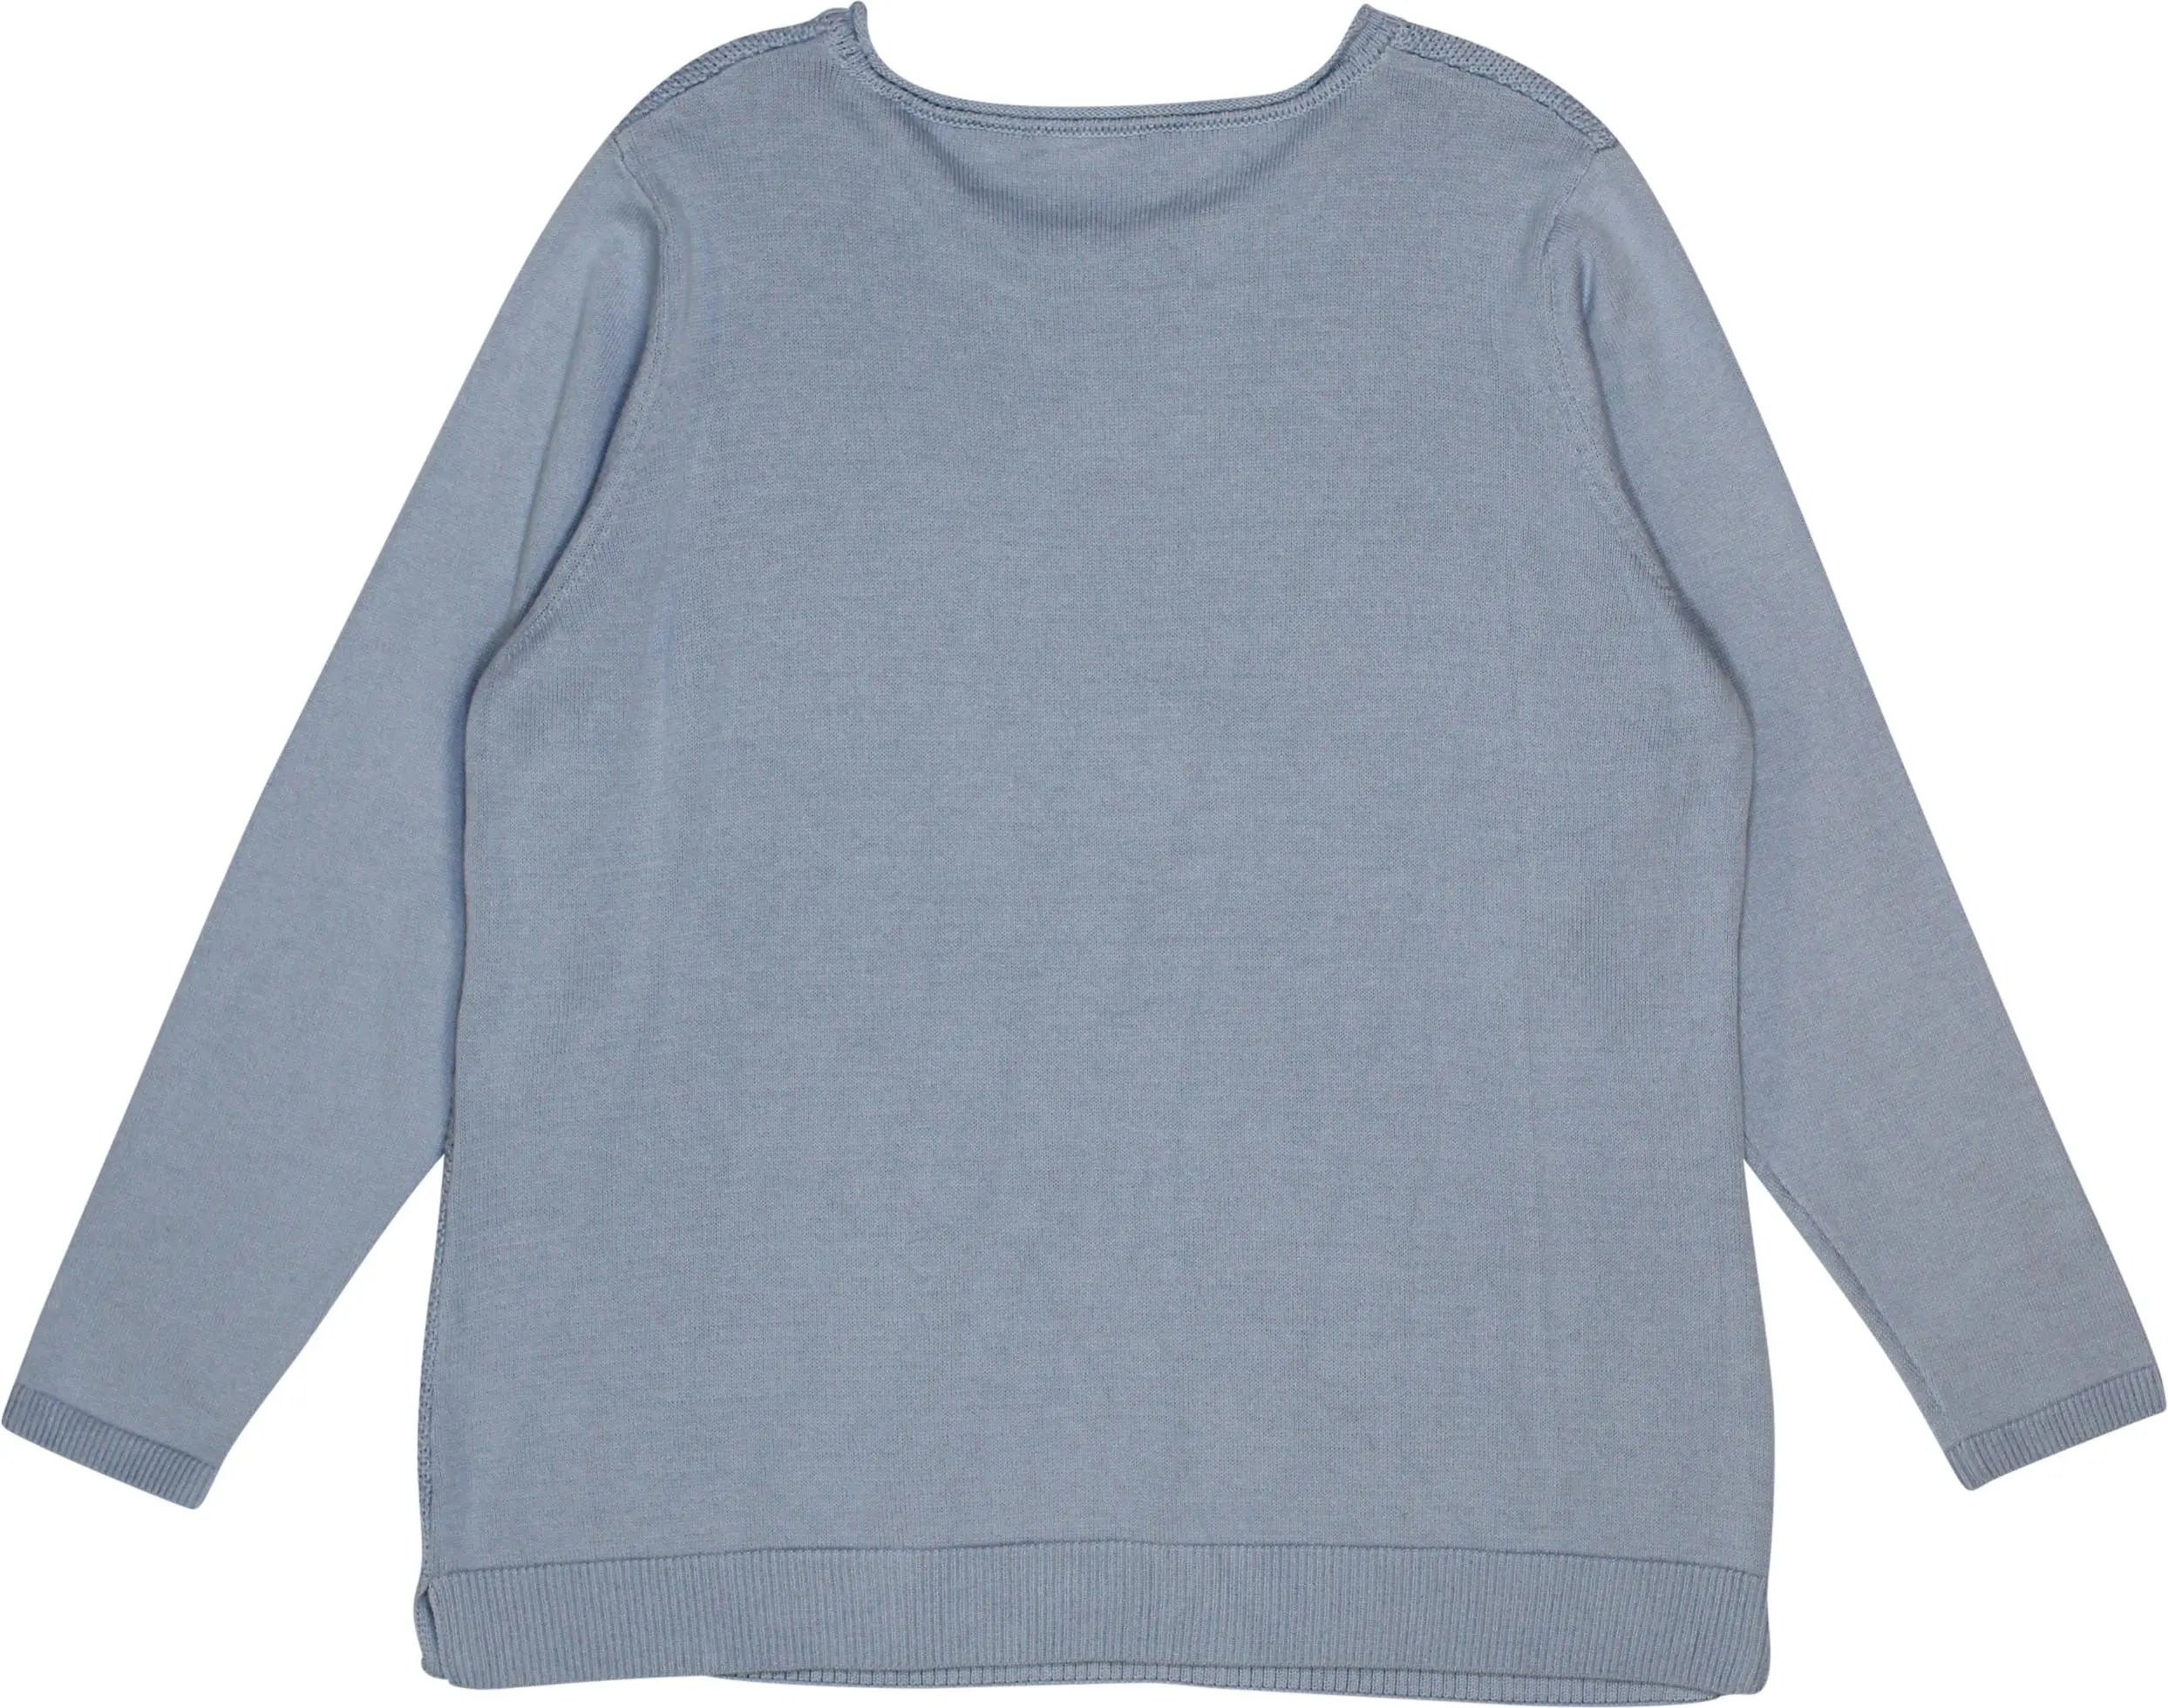 Olsen - Blue Knitted Jumper- ThriftTale.com - Vintage and second handclothing